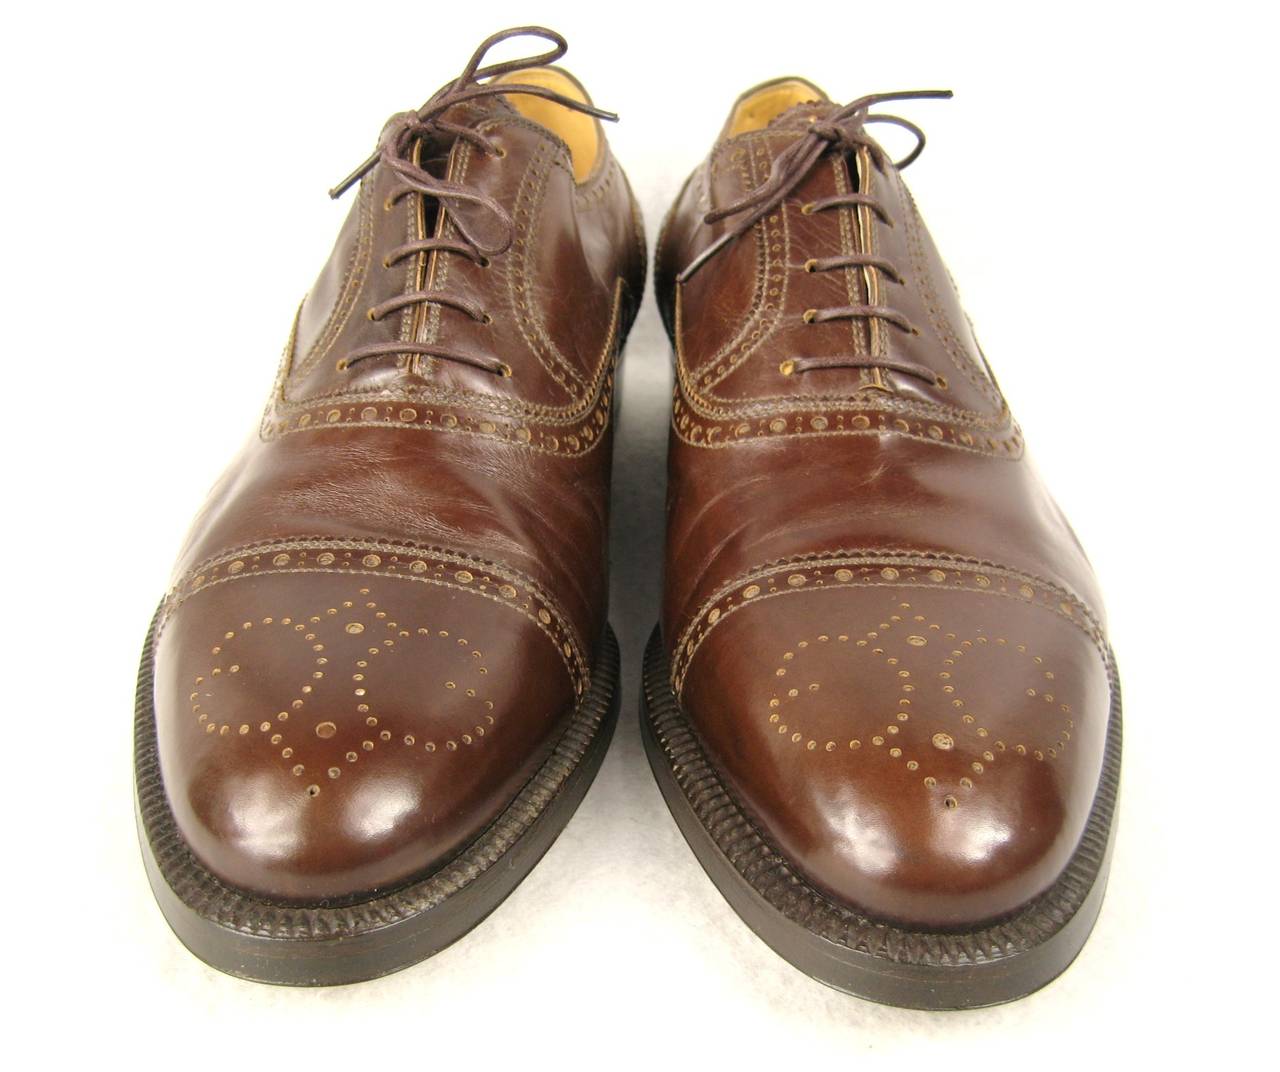 Brown 1970s Gucci Wingtip Oxfords Men's Shoe For Sale at 1stdibs